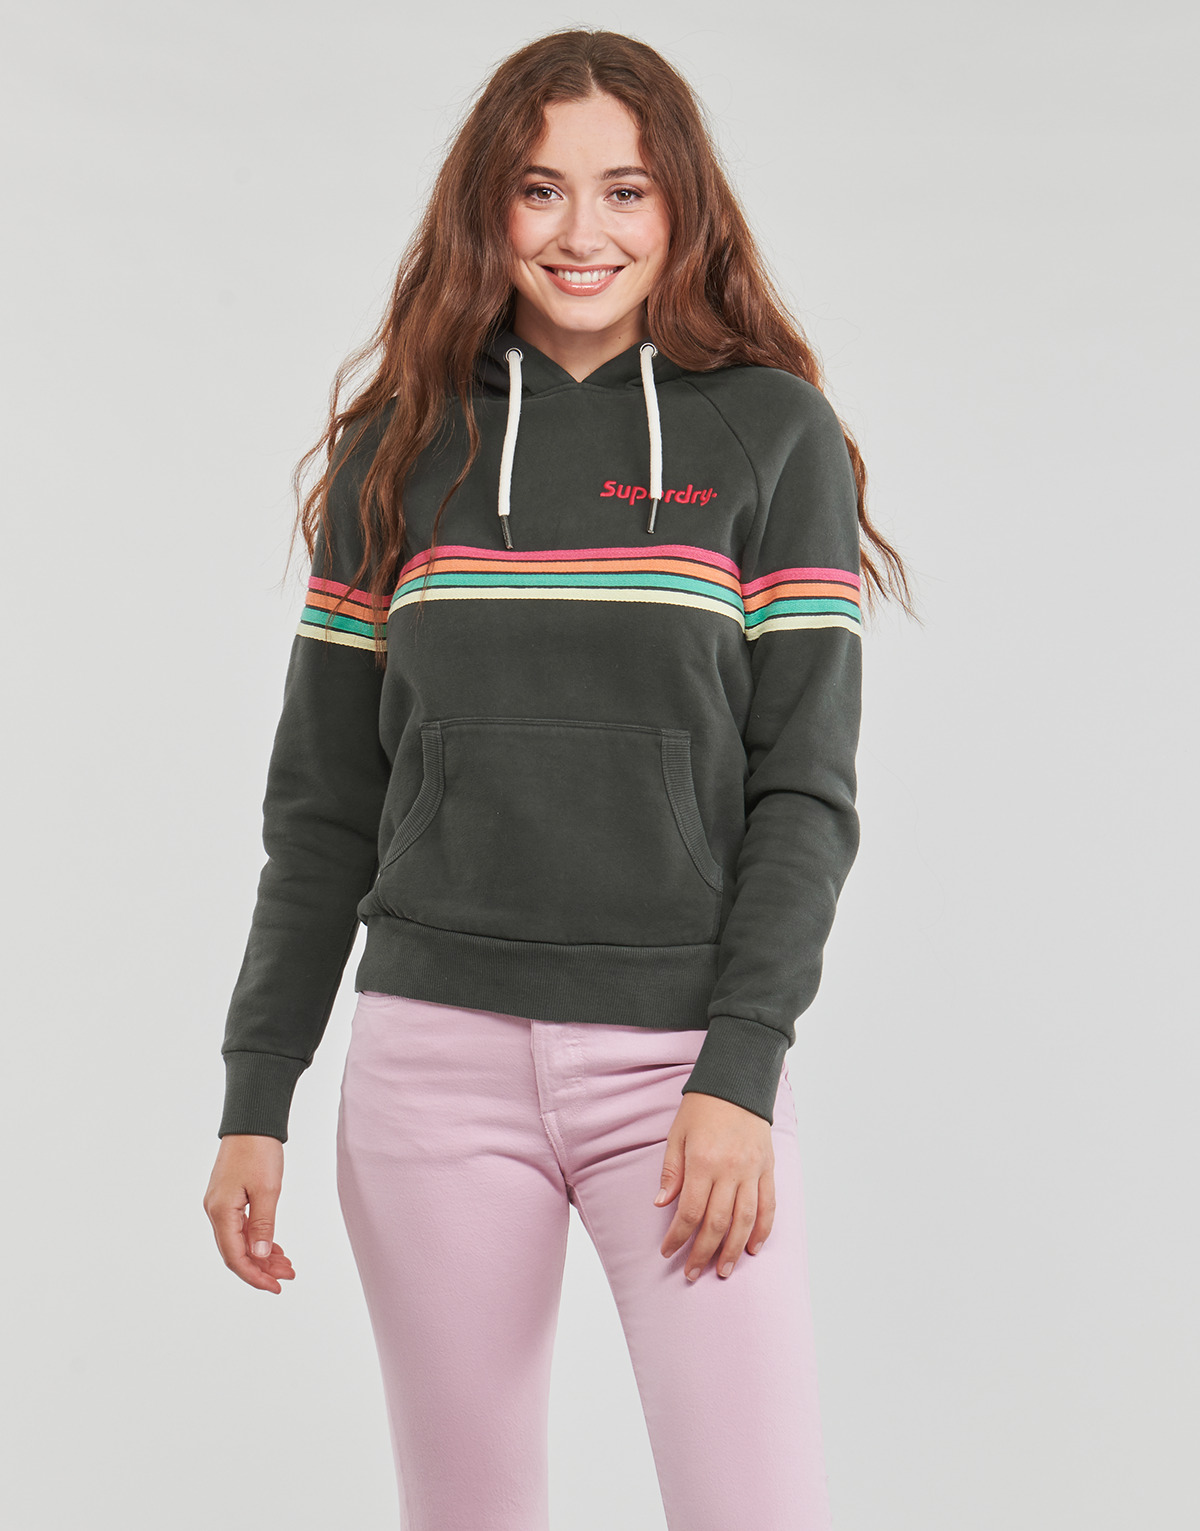 Textil Mulher Sweats Superdry RAINBOW STRIPE LOGO Sweater HOODIE Preto / Multicolor